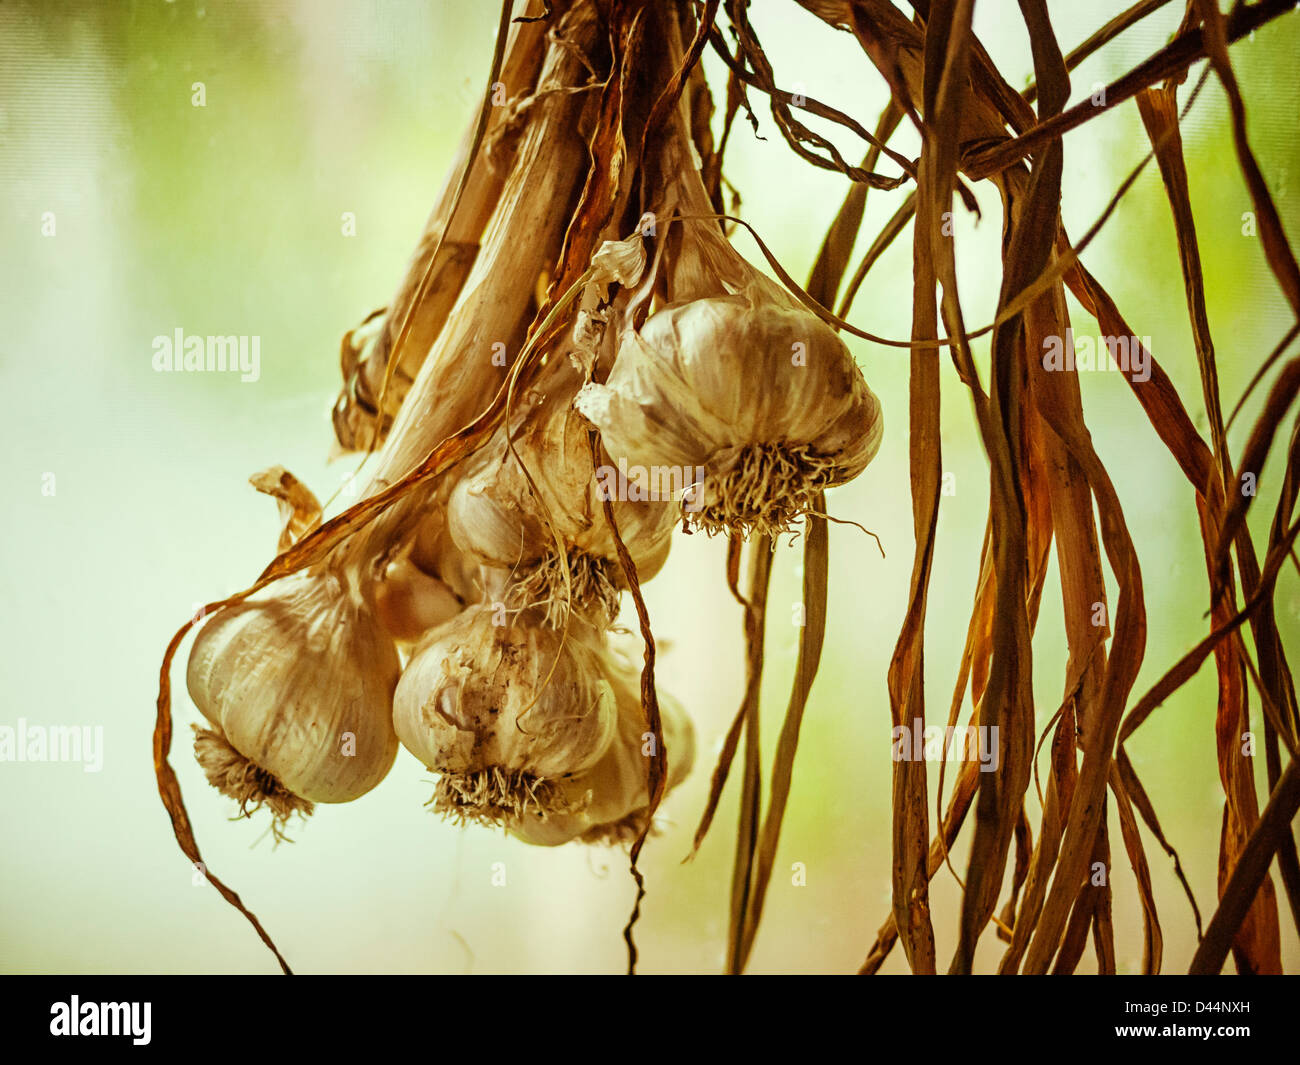 Garlic bulbs hung up to dry Stock Photo